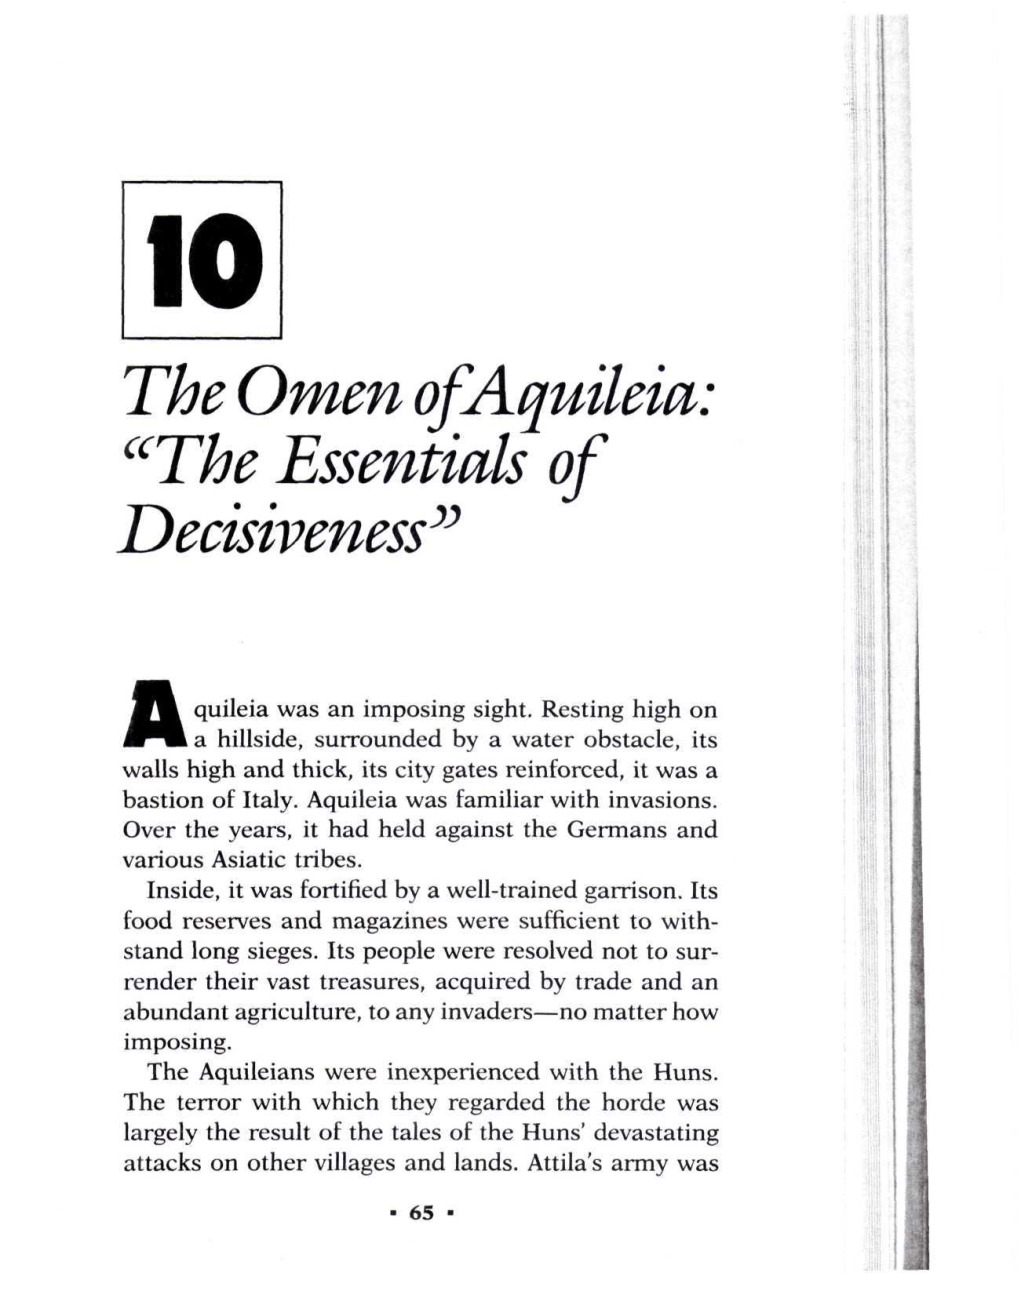 The Omen of Aquileia. "The Essentials of Decisiveness"